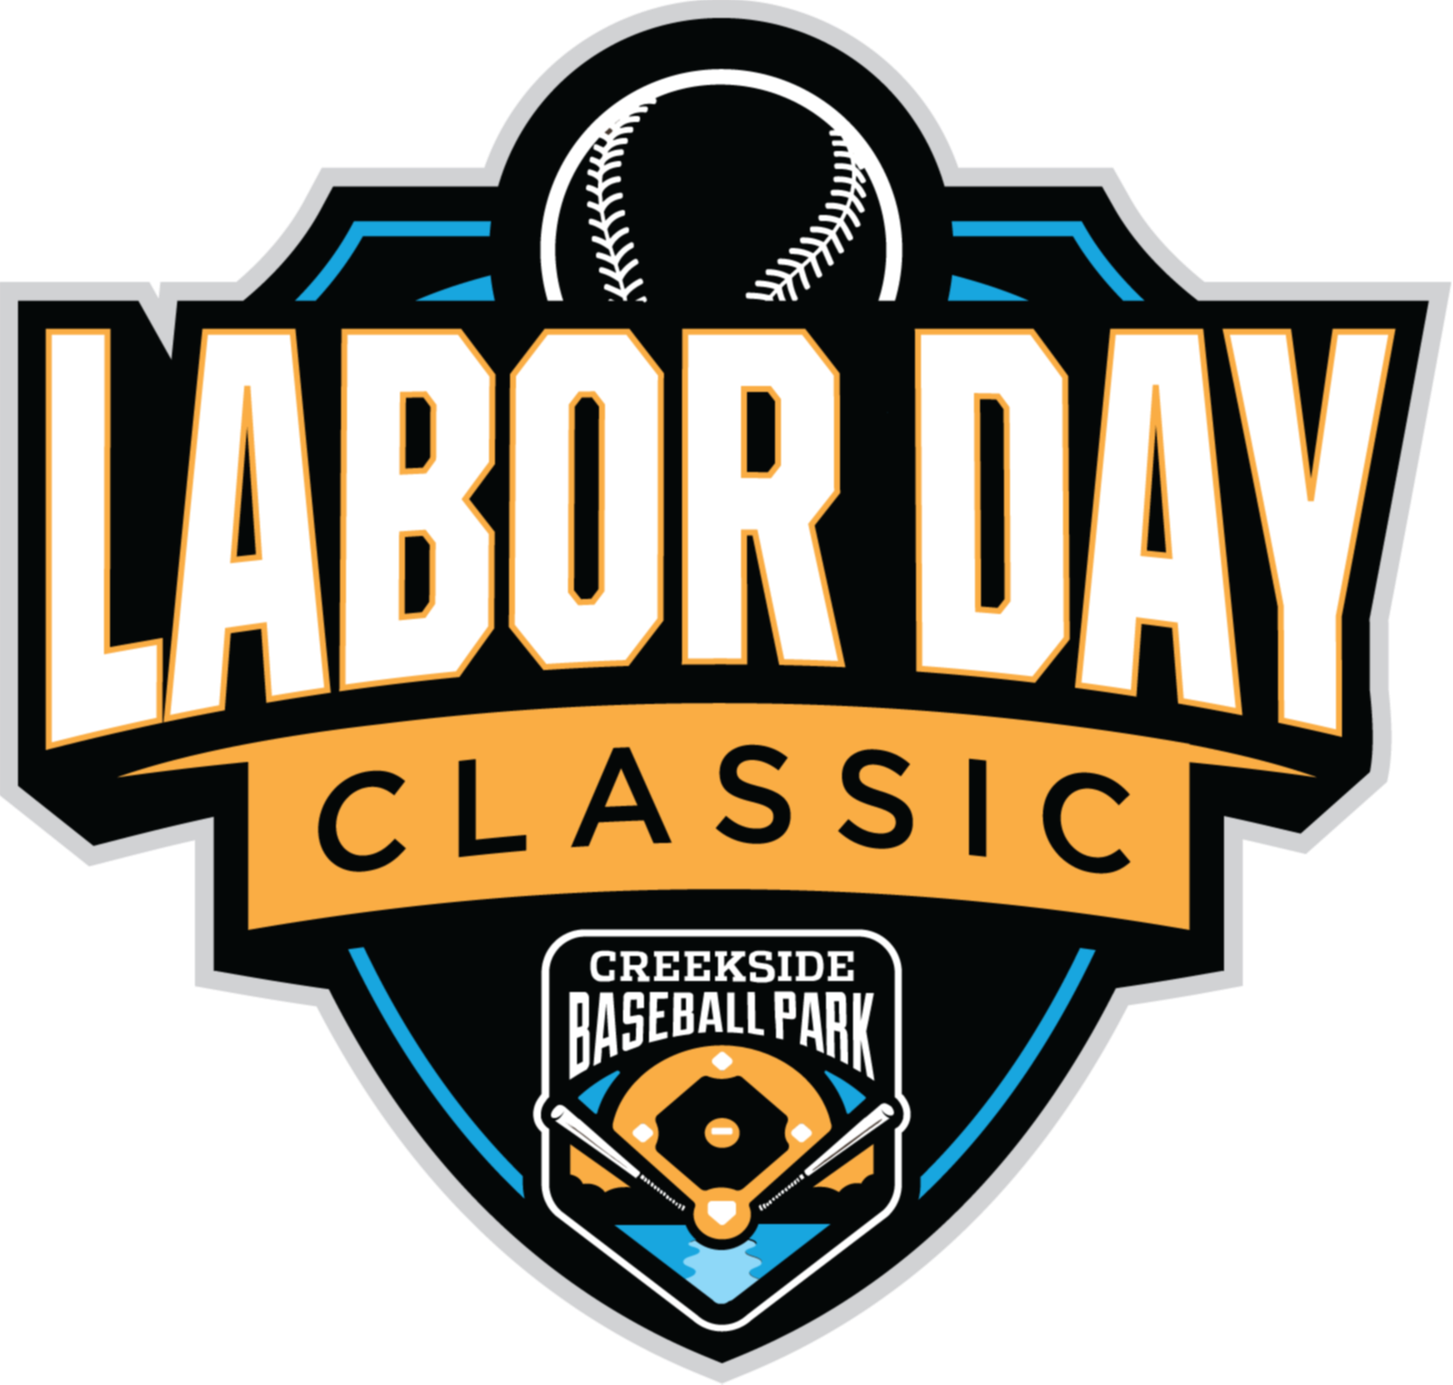 Labor Day Classic 09/02/2022 09/04/2022 Creekside Baseball Park